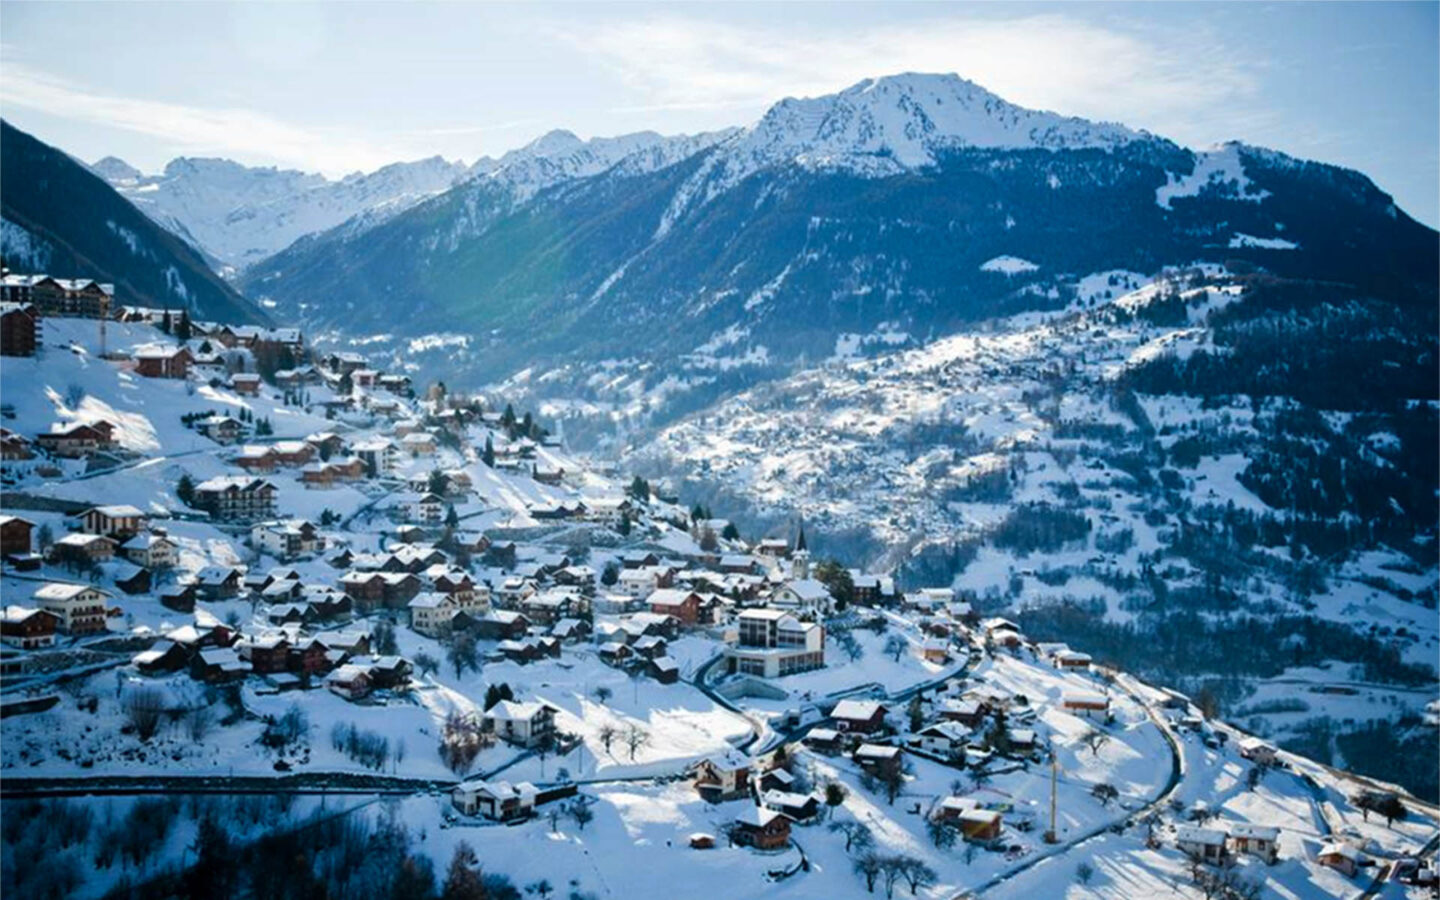 Luxury Ski Chalets in Veysonnaz, Switzerland